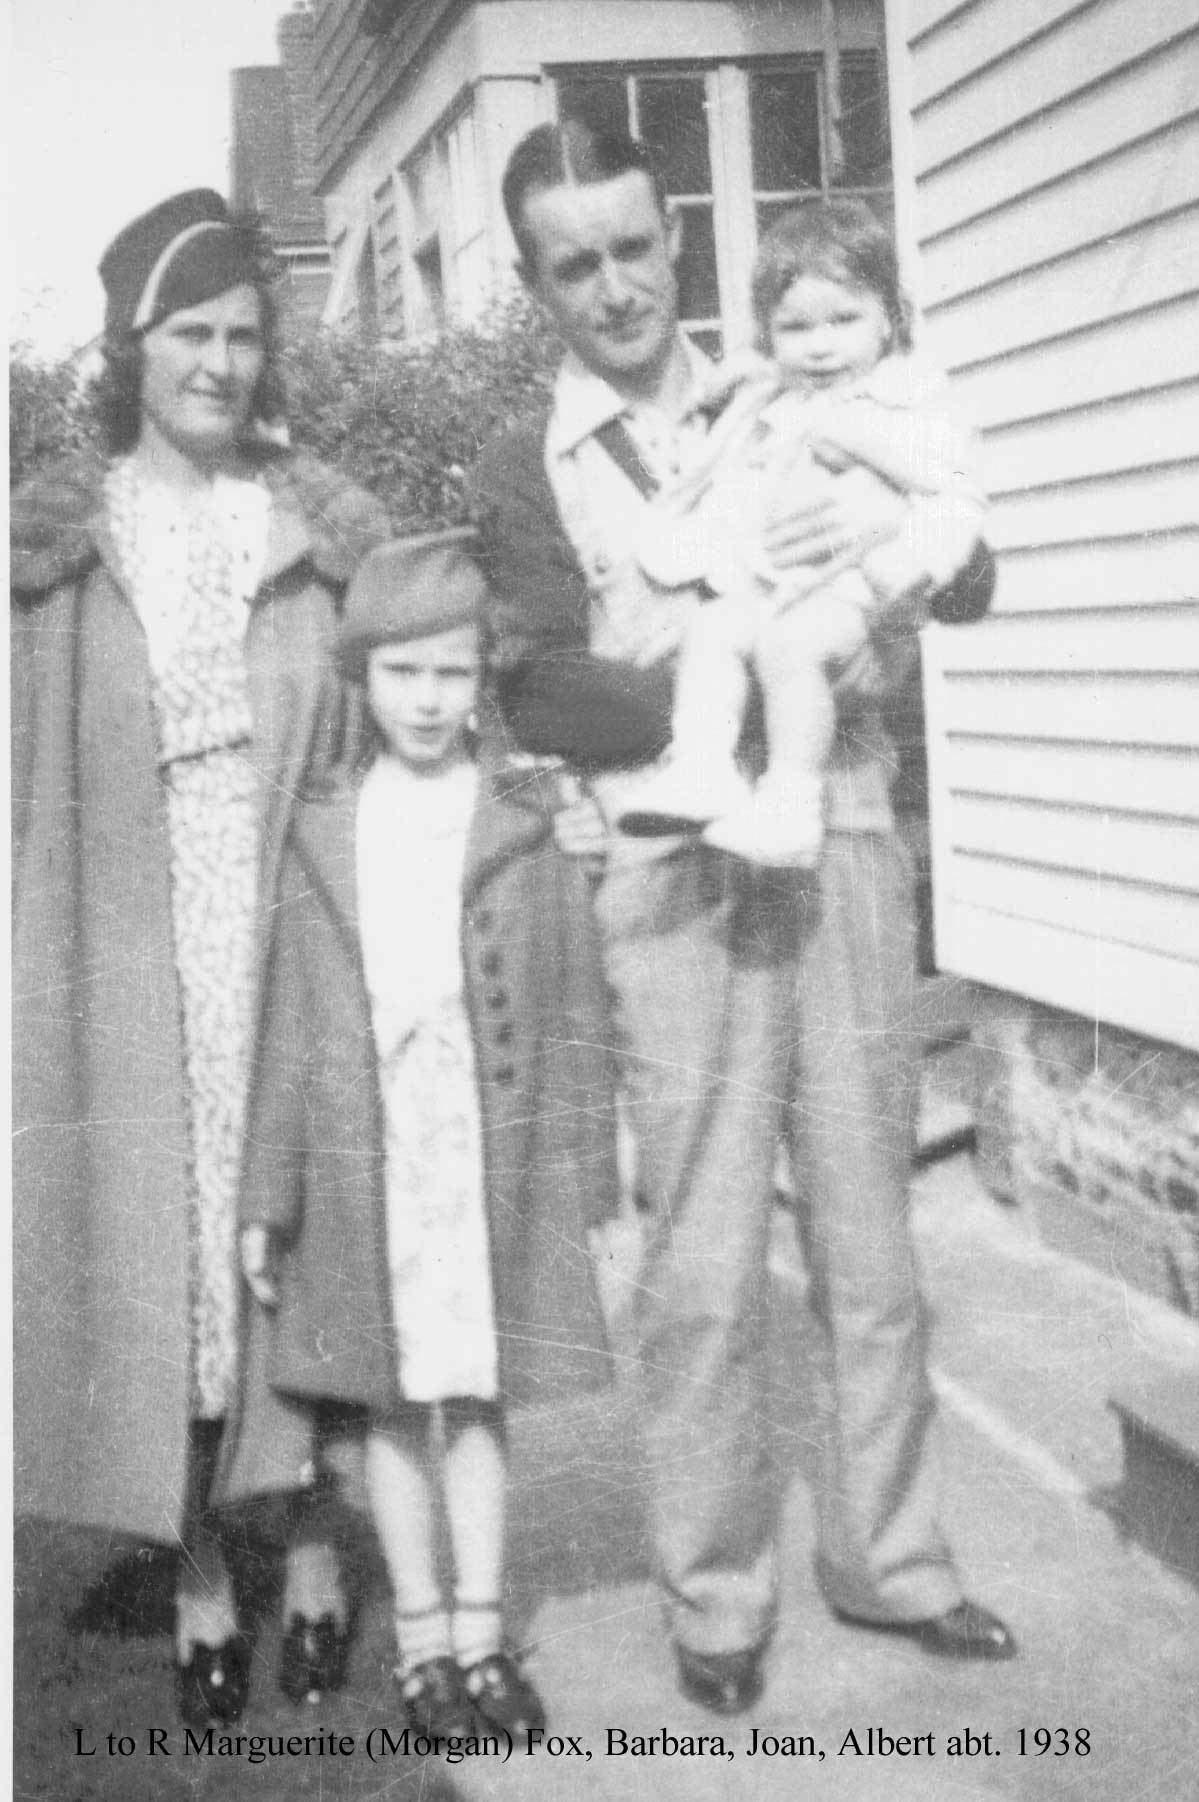 Al, Marguerite, Joan (baby) and Barbara 